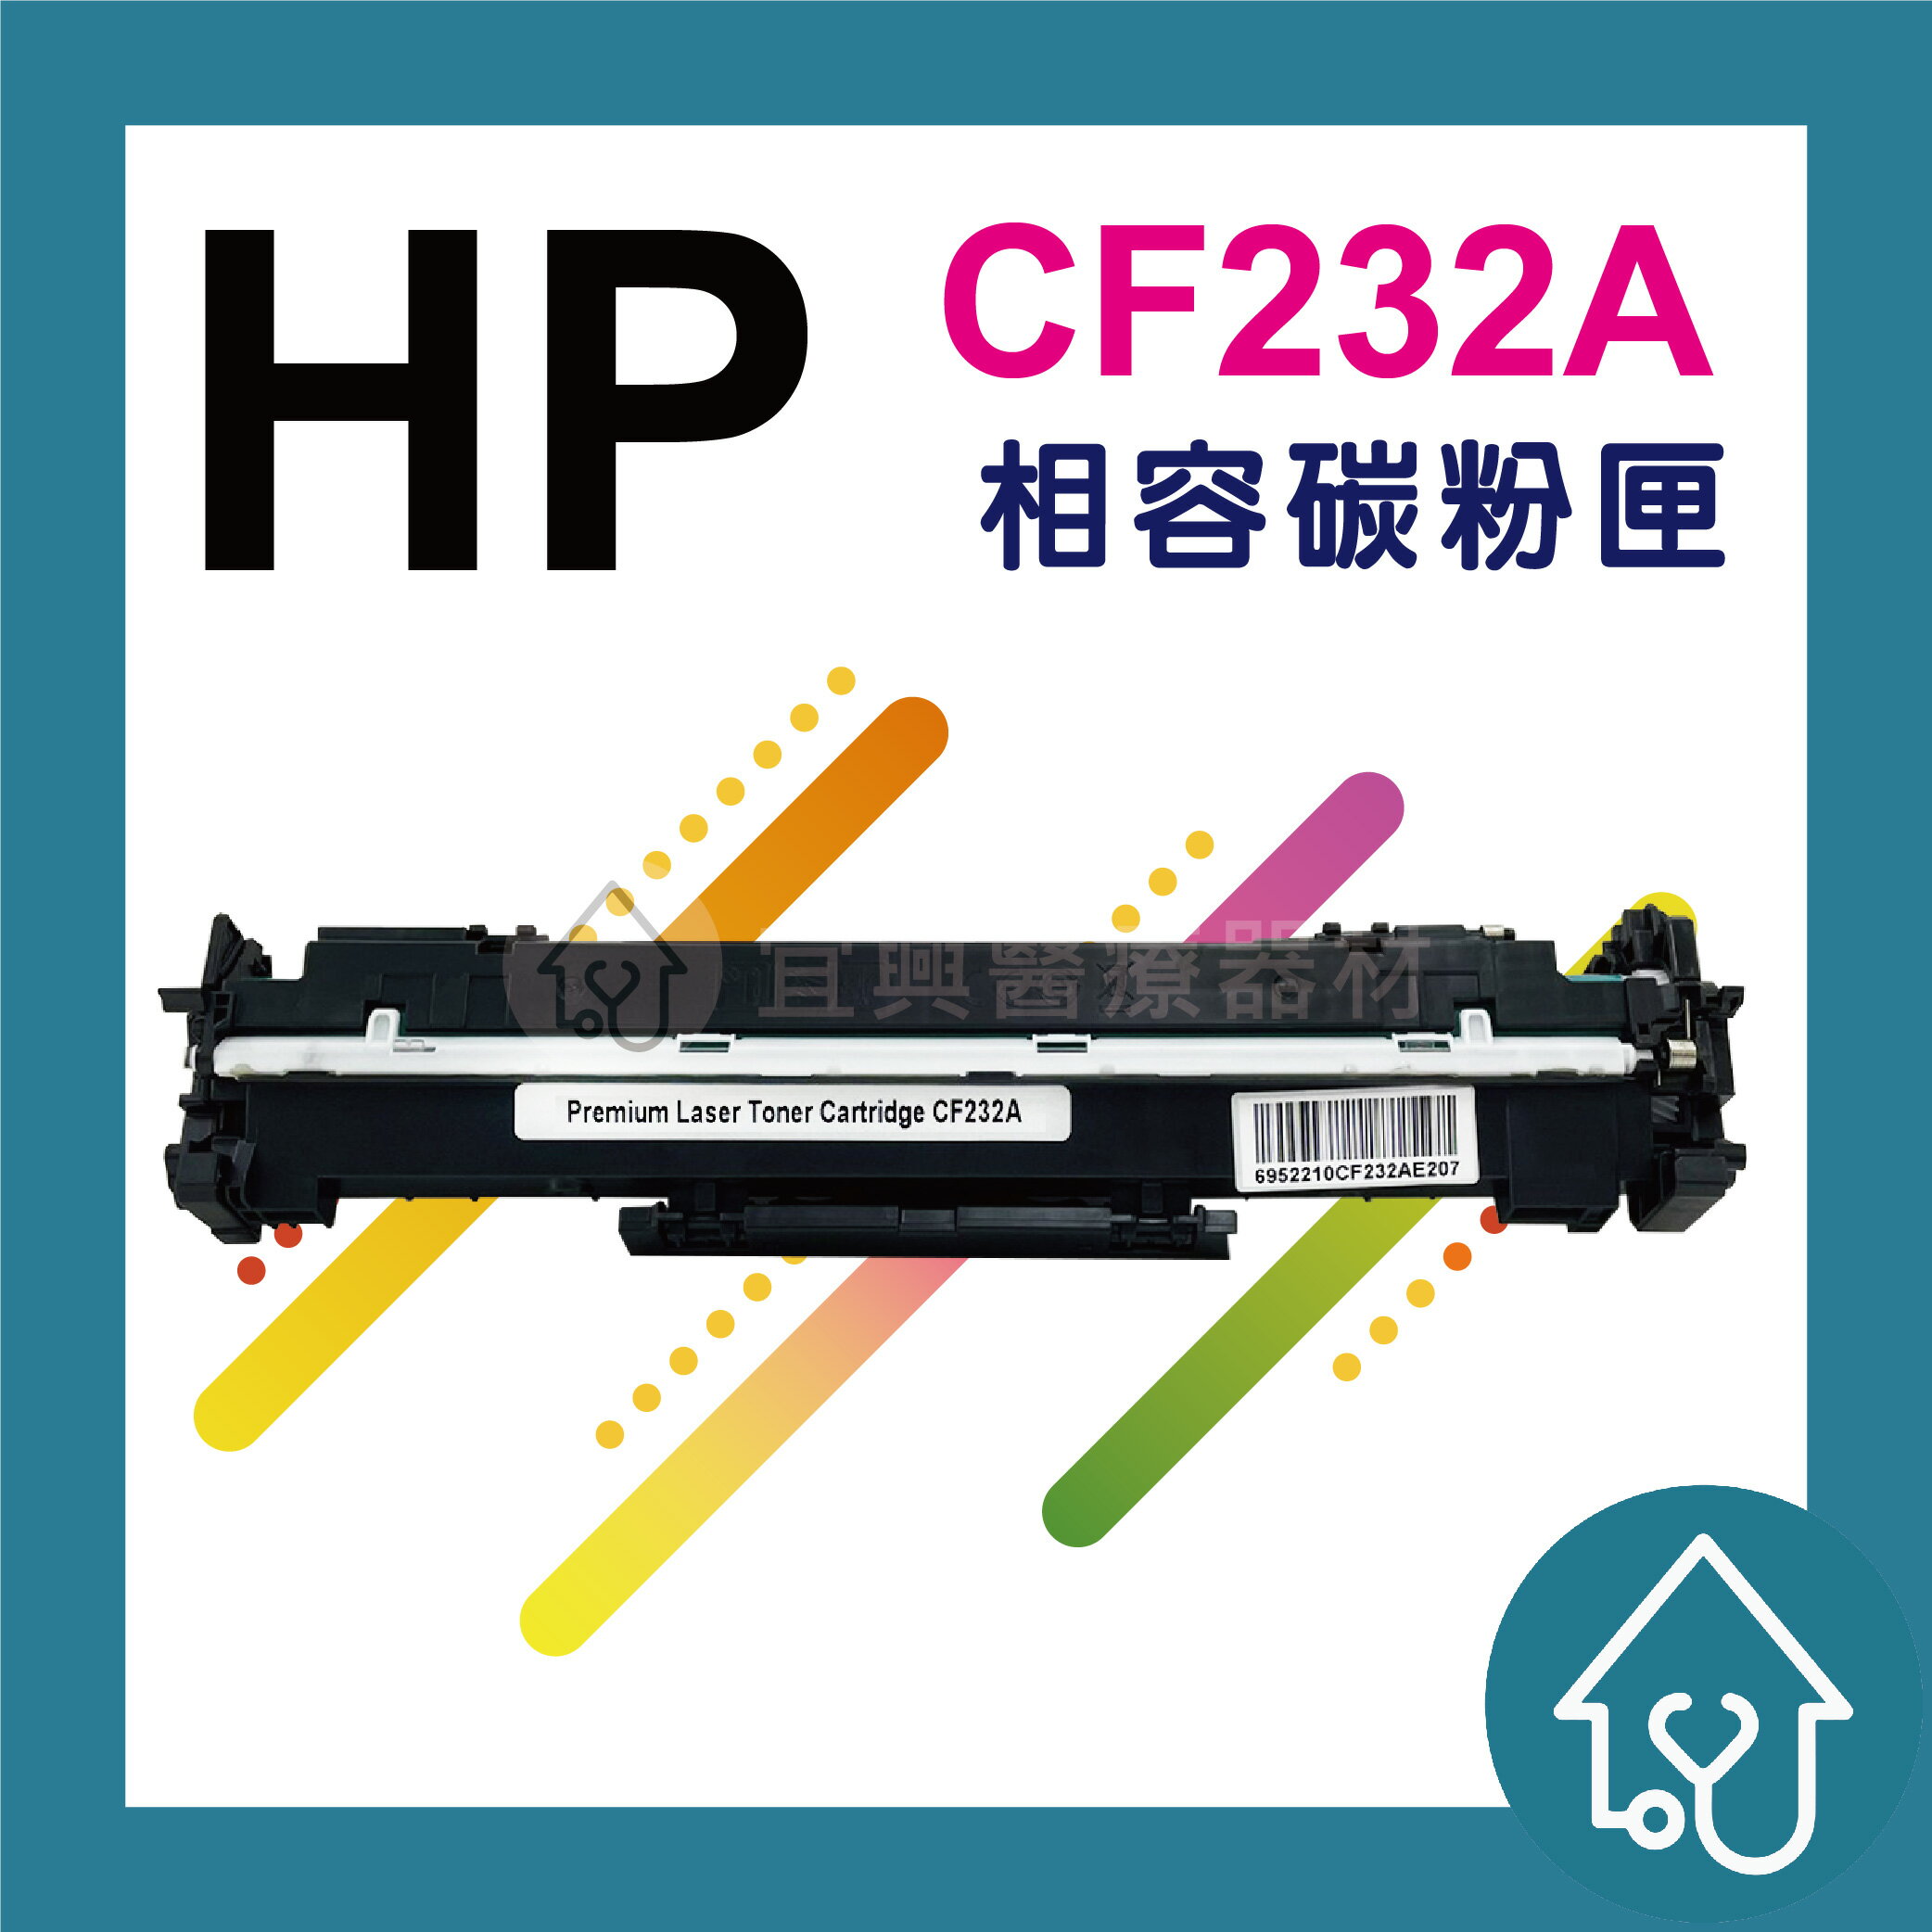 HP CF232A 副廠碳粉匣 M203d/M203dn/M203dw/M227sdn/M227fdw